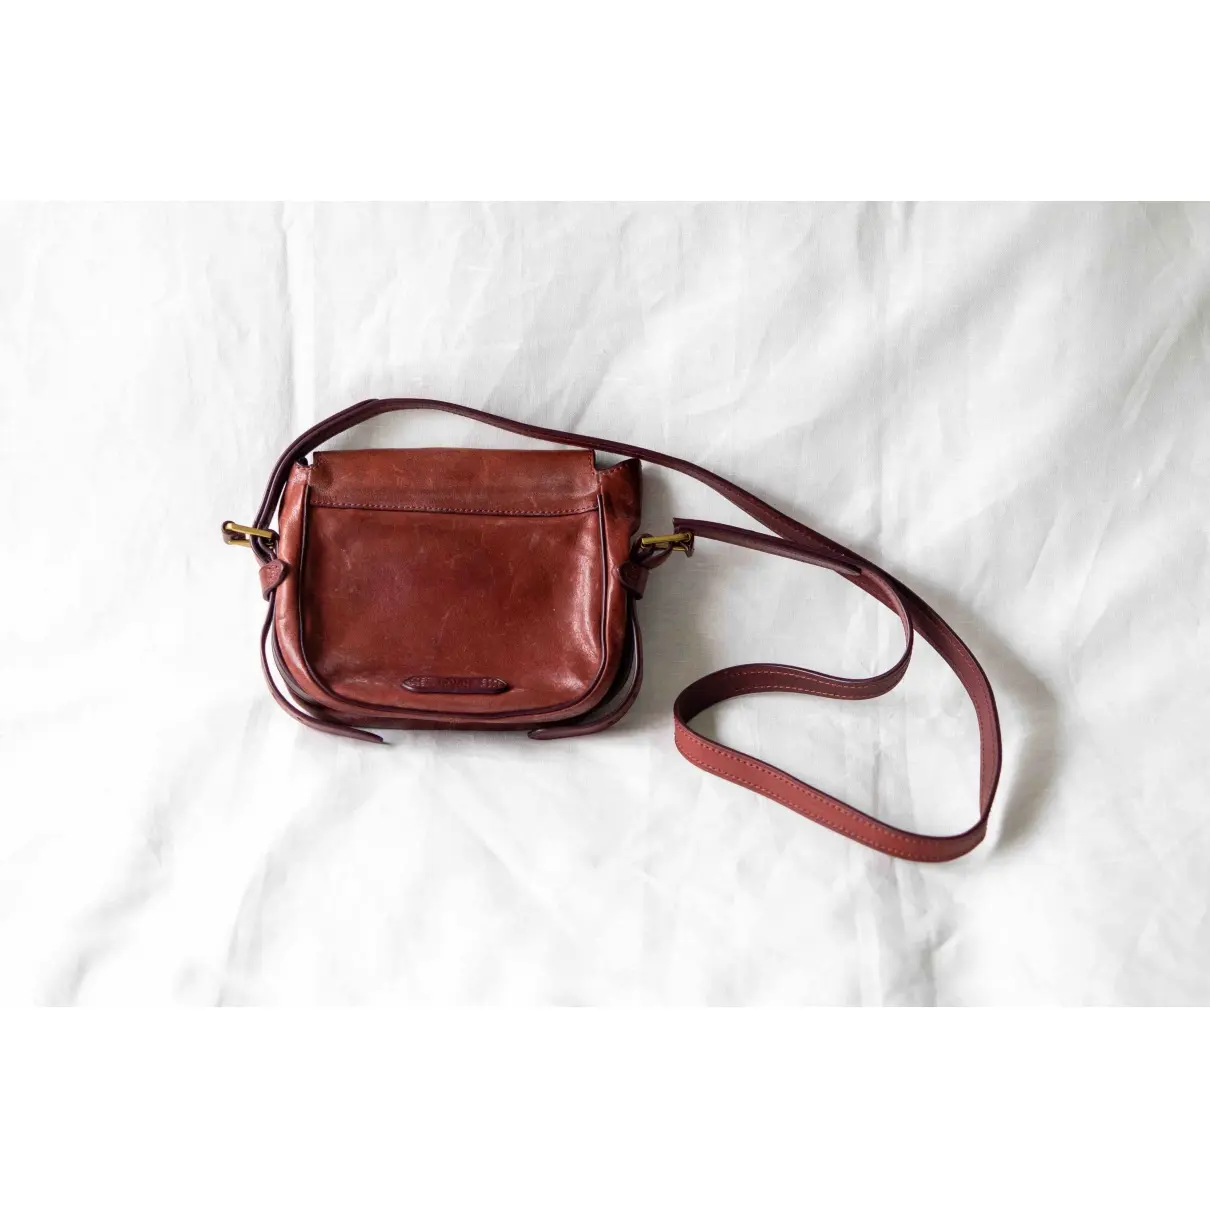 Ralph Lauren Leather crossbody bag for sale